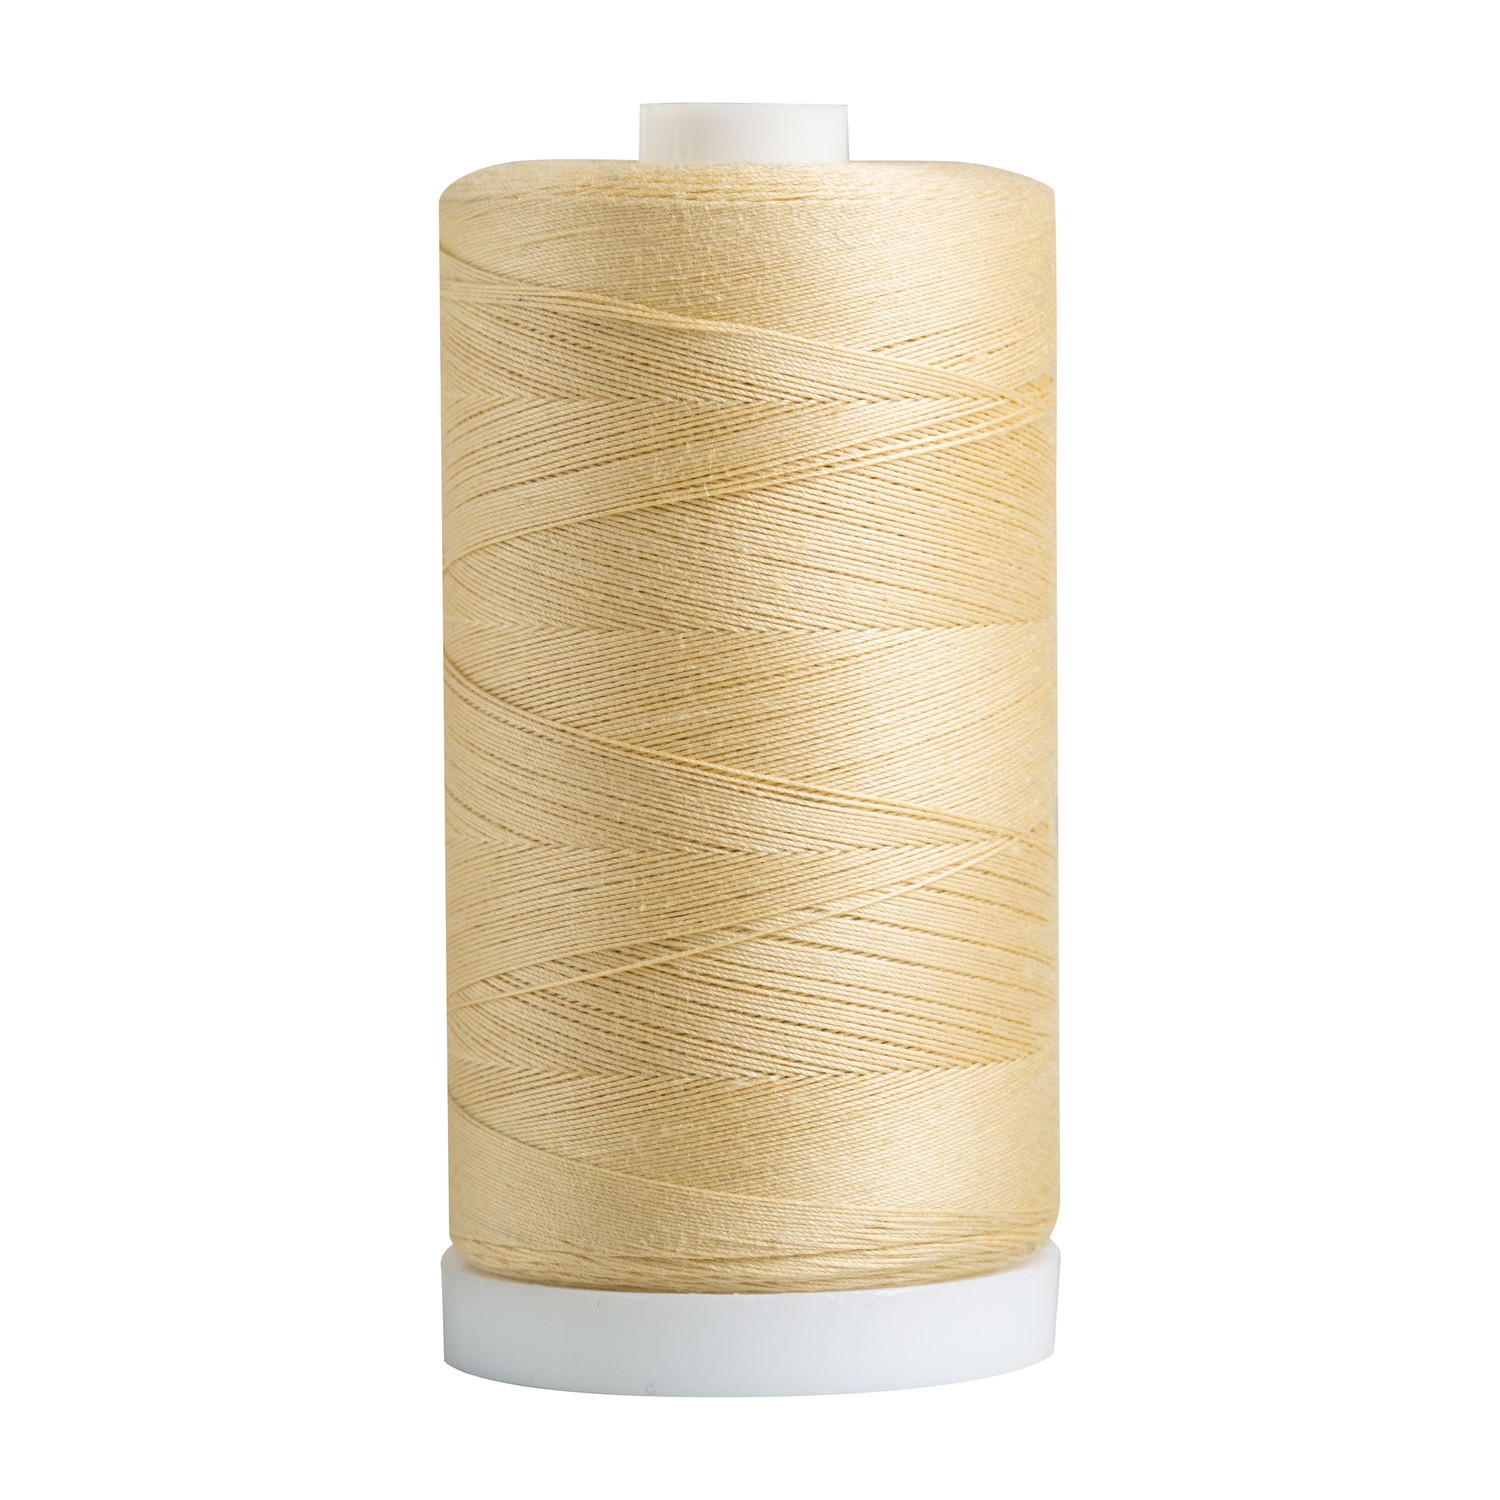 Janome Iris Ultra 0005 - LIGHT BROWN Cotton Quilting Thread